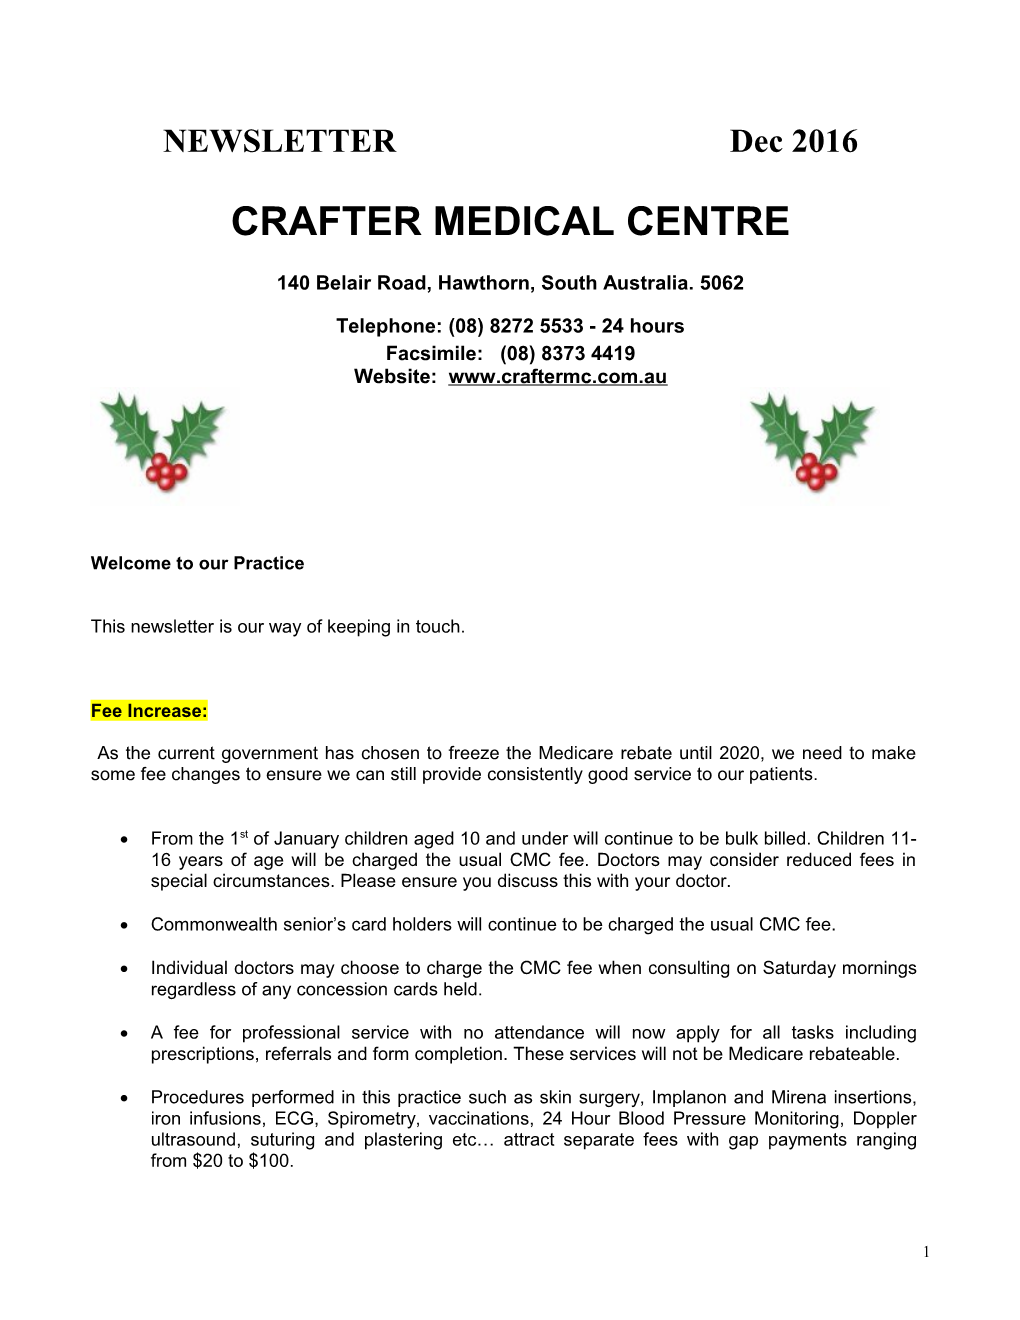 Crafter Medical Centre